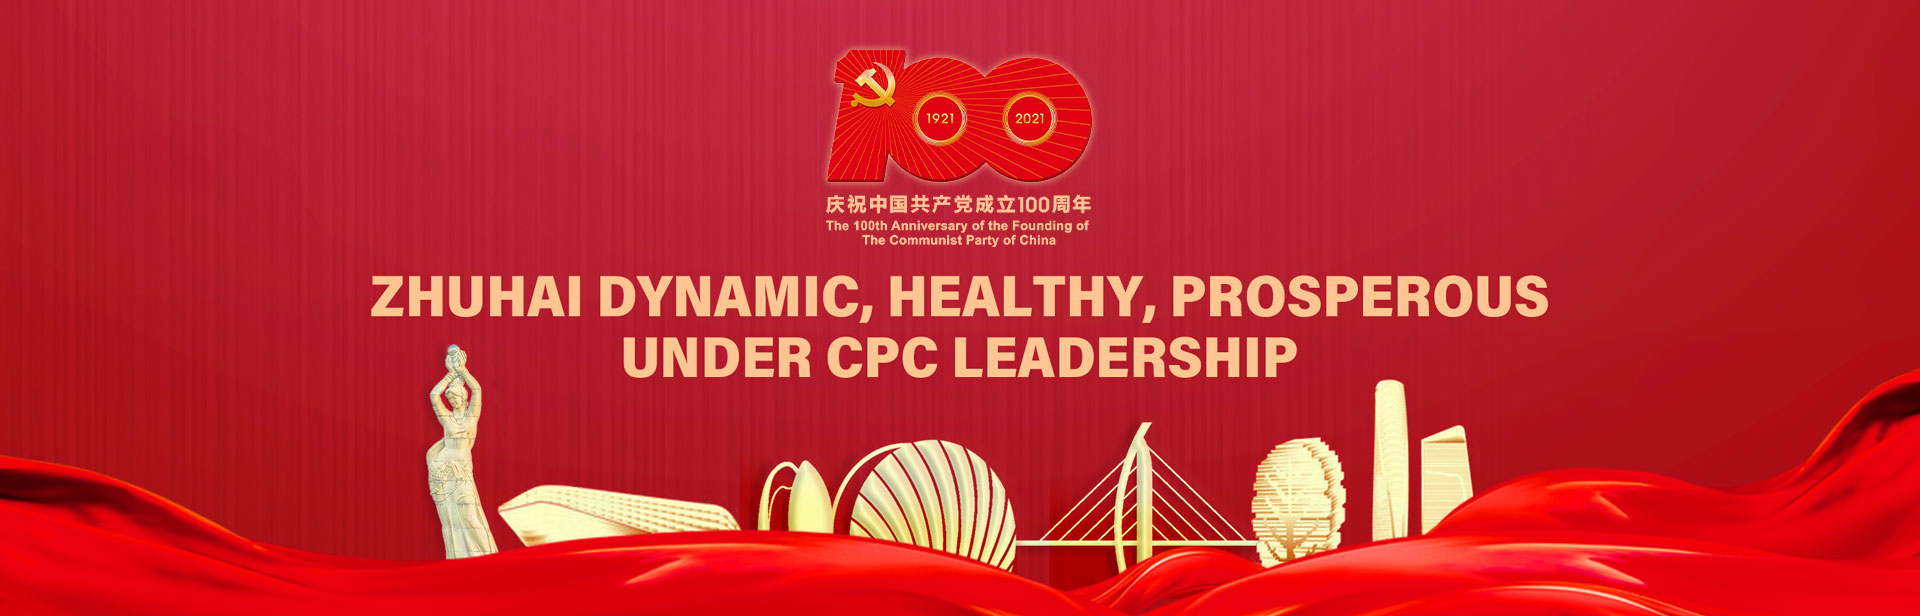 Zhuhai prosperous under CPC leadership